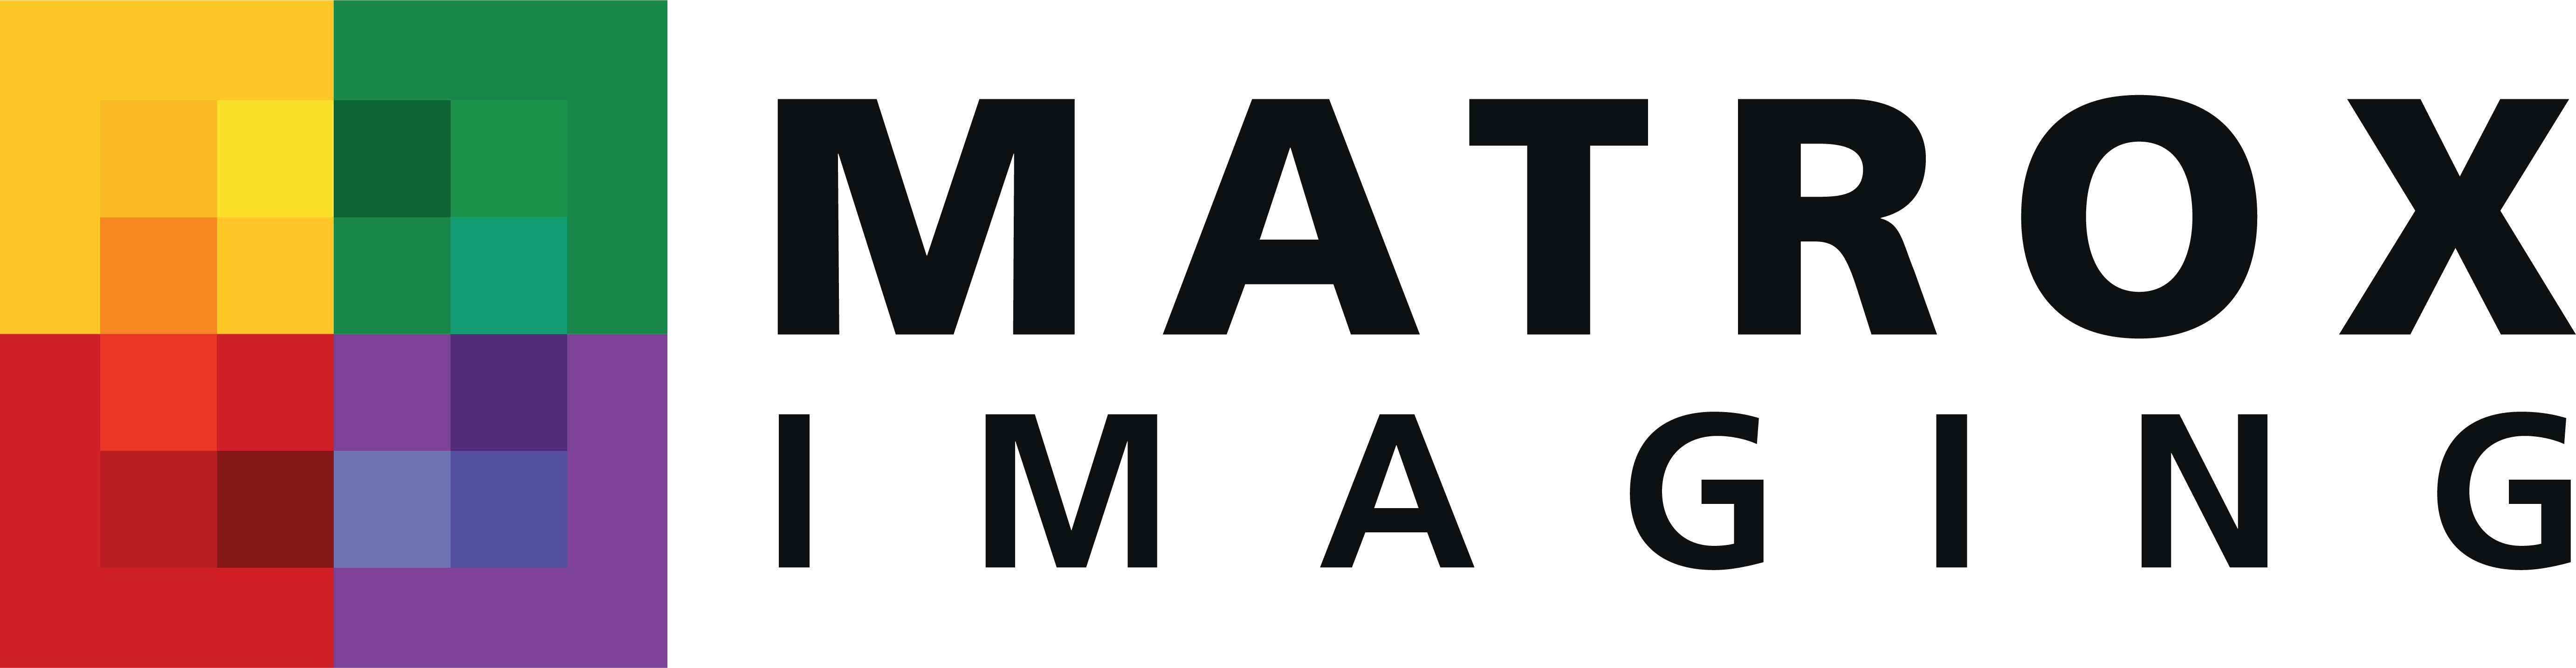 matrox_logo